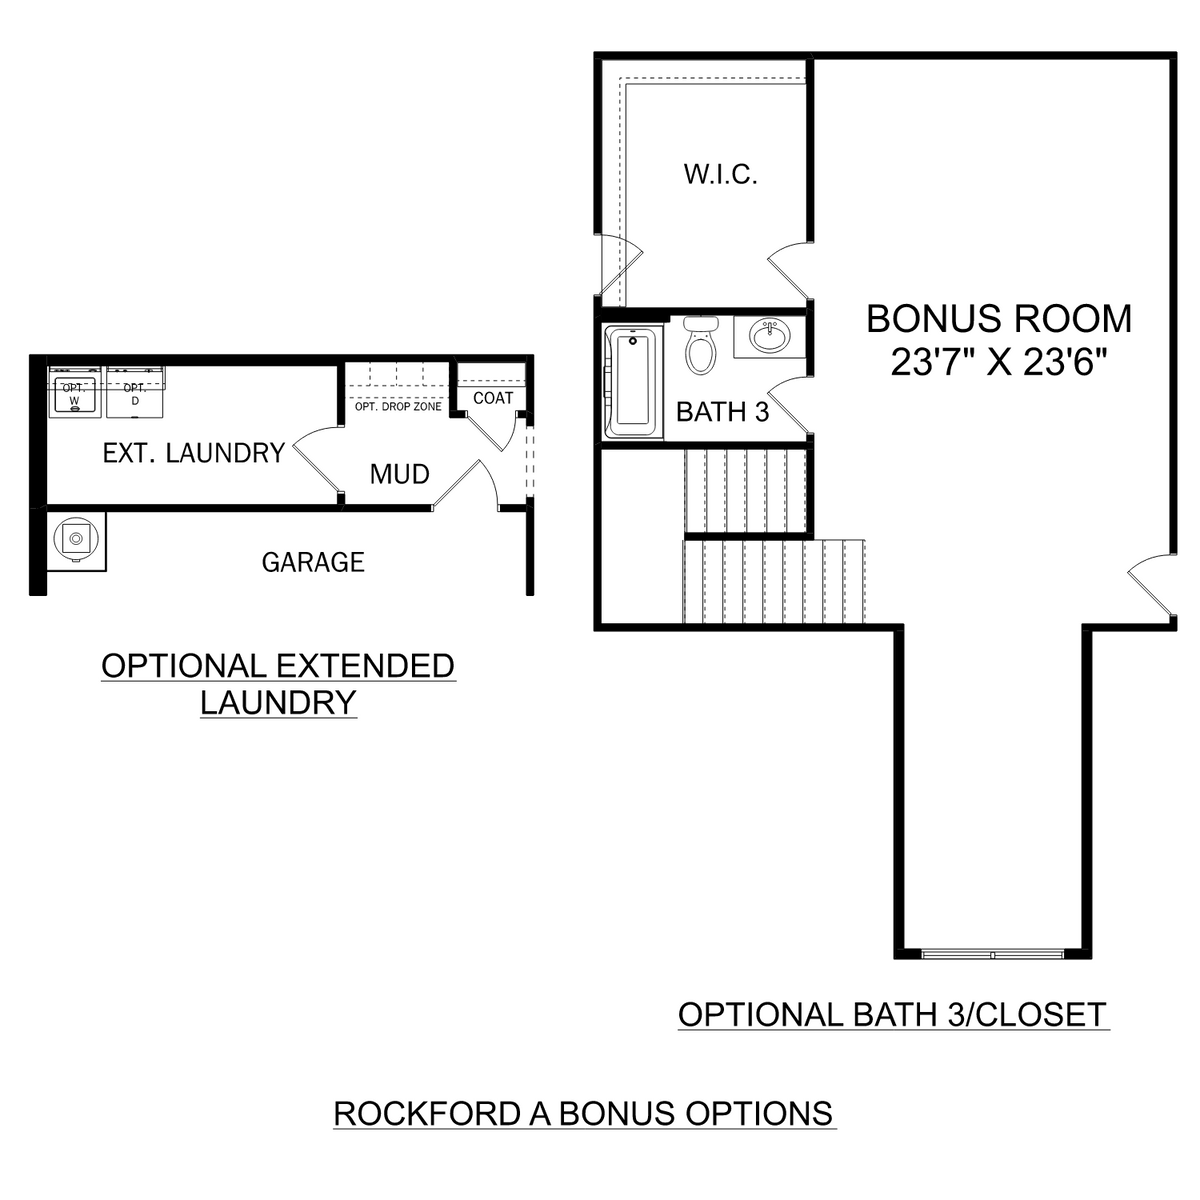 3 - The Rockford with Bonus floor plan layout for 127 Slade Thomas Drive in Davidson Homes' Pikes Ridge community.